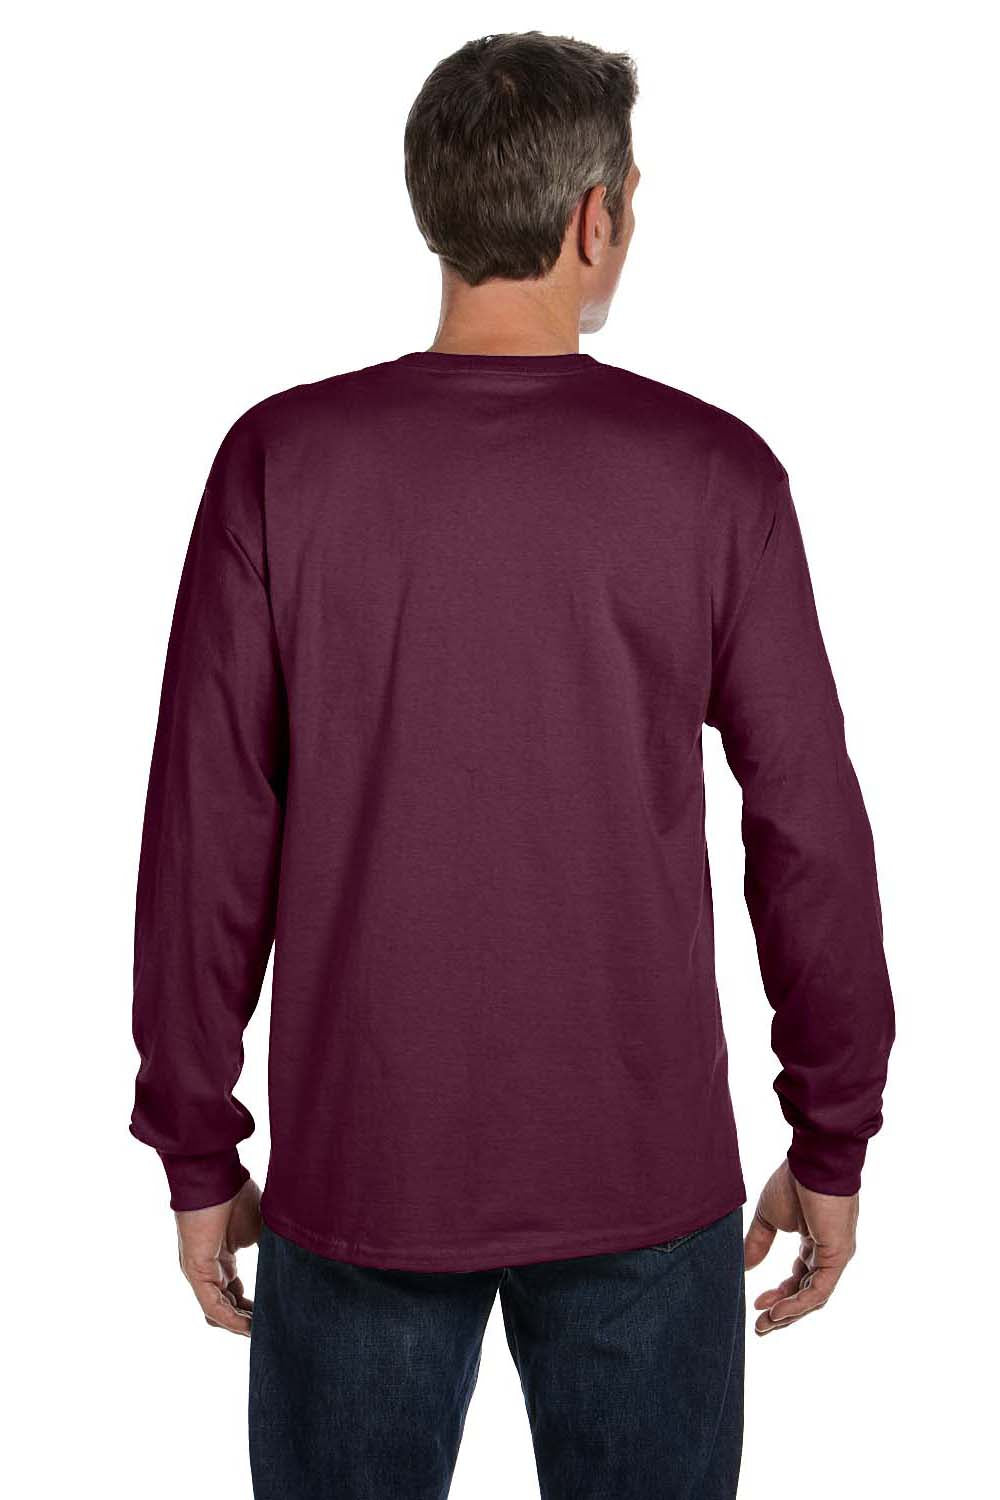 Hanes 5596 Mens ComfortSoft Long Sleeve Crewneck T-Shirt w/ Pocket Maroon Back